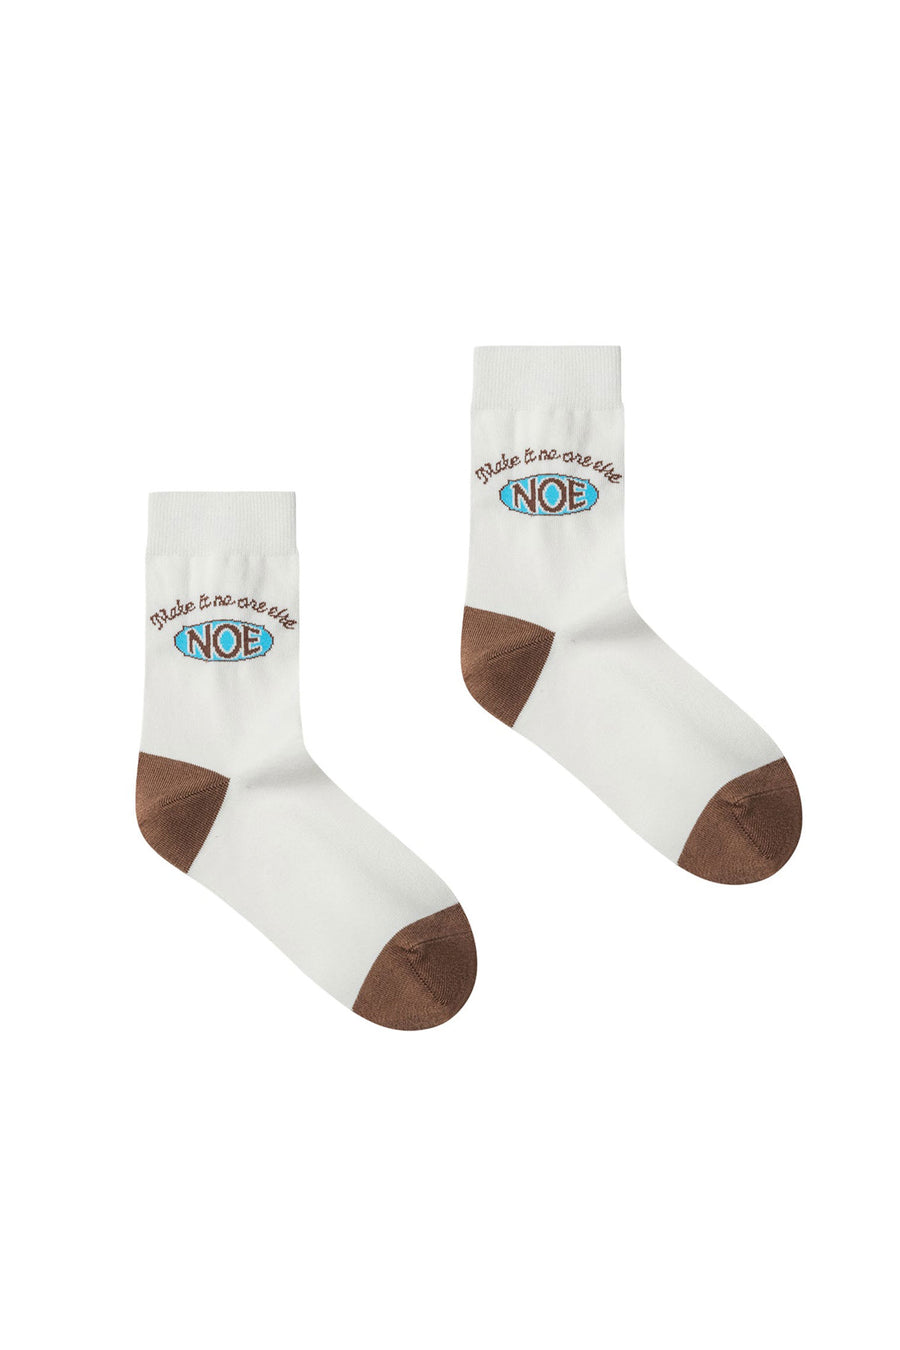 CHUU Noe Knit Socks